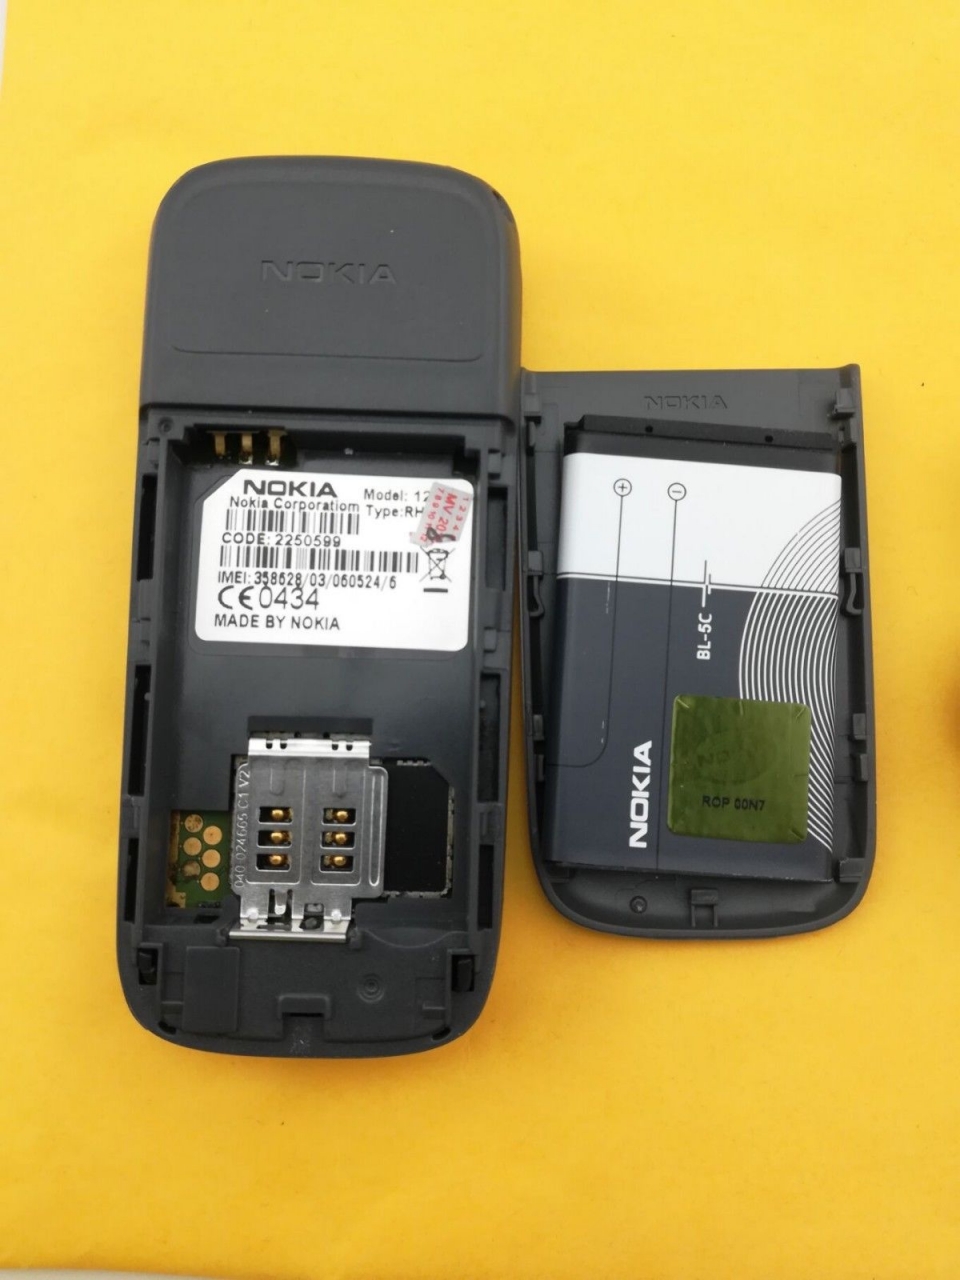 Refurbished phone Original Cellular Nokia 1208 Cheap phones GSM unlocked phone red 12